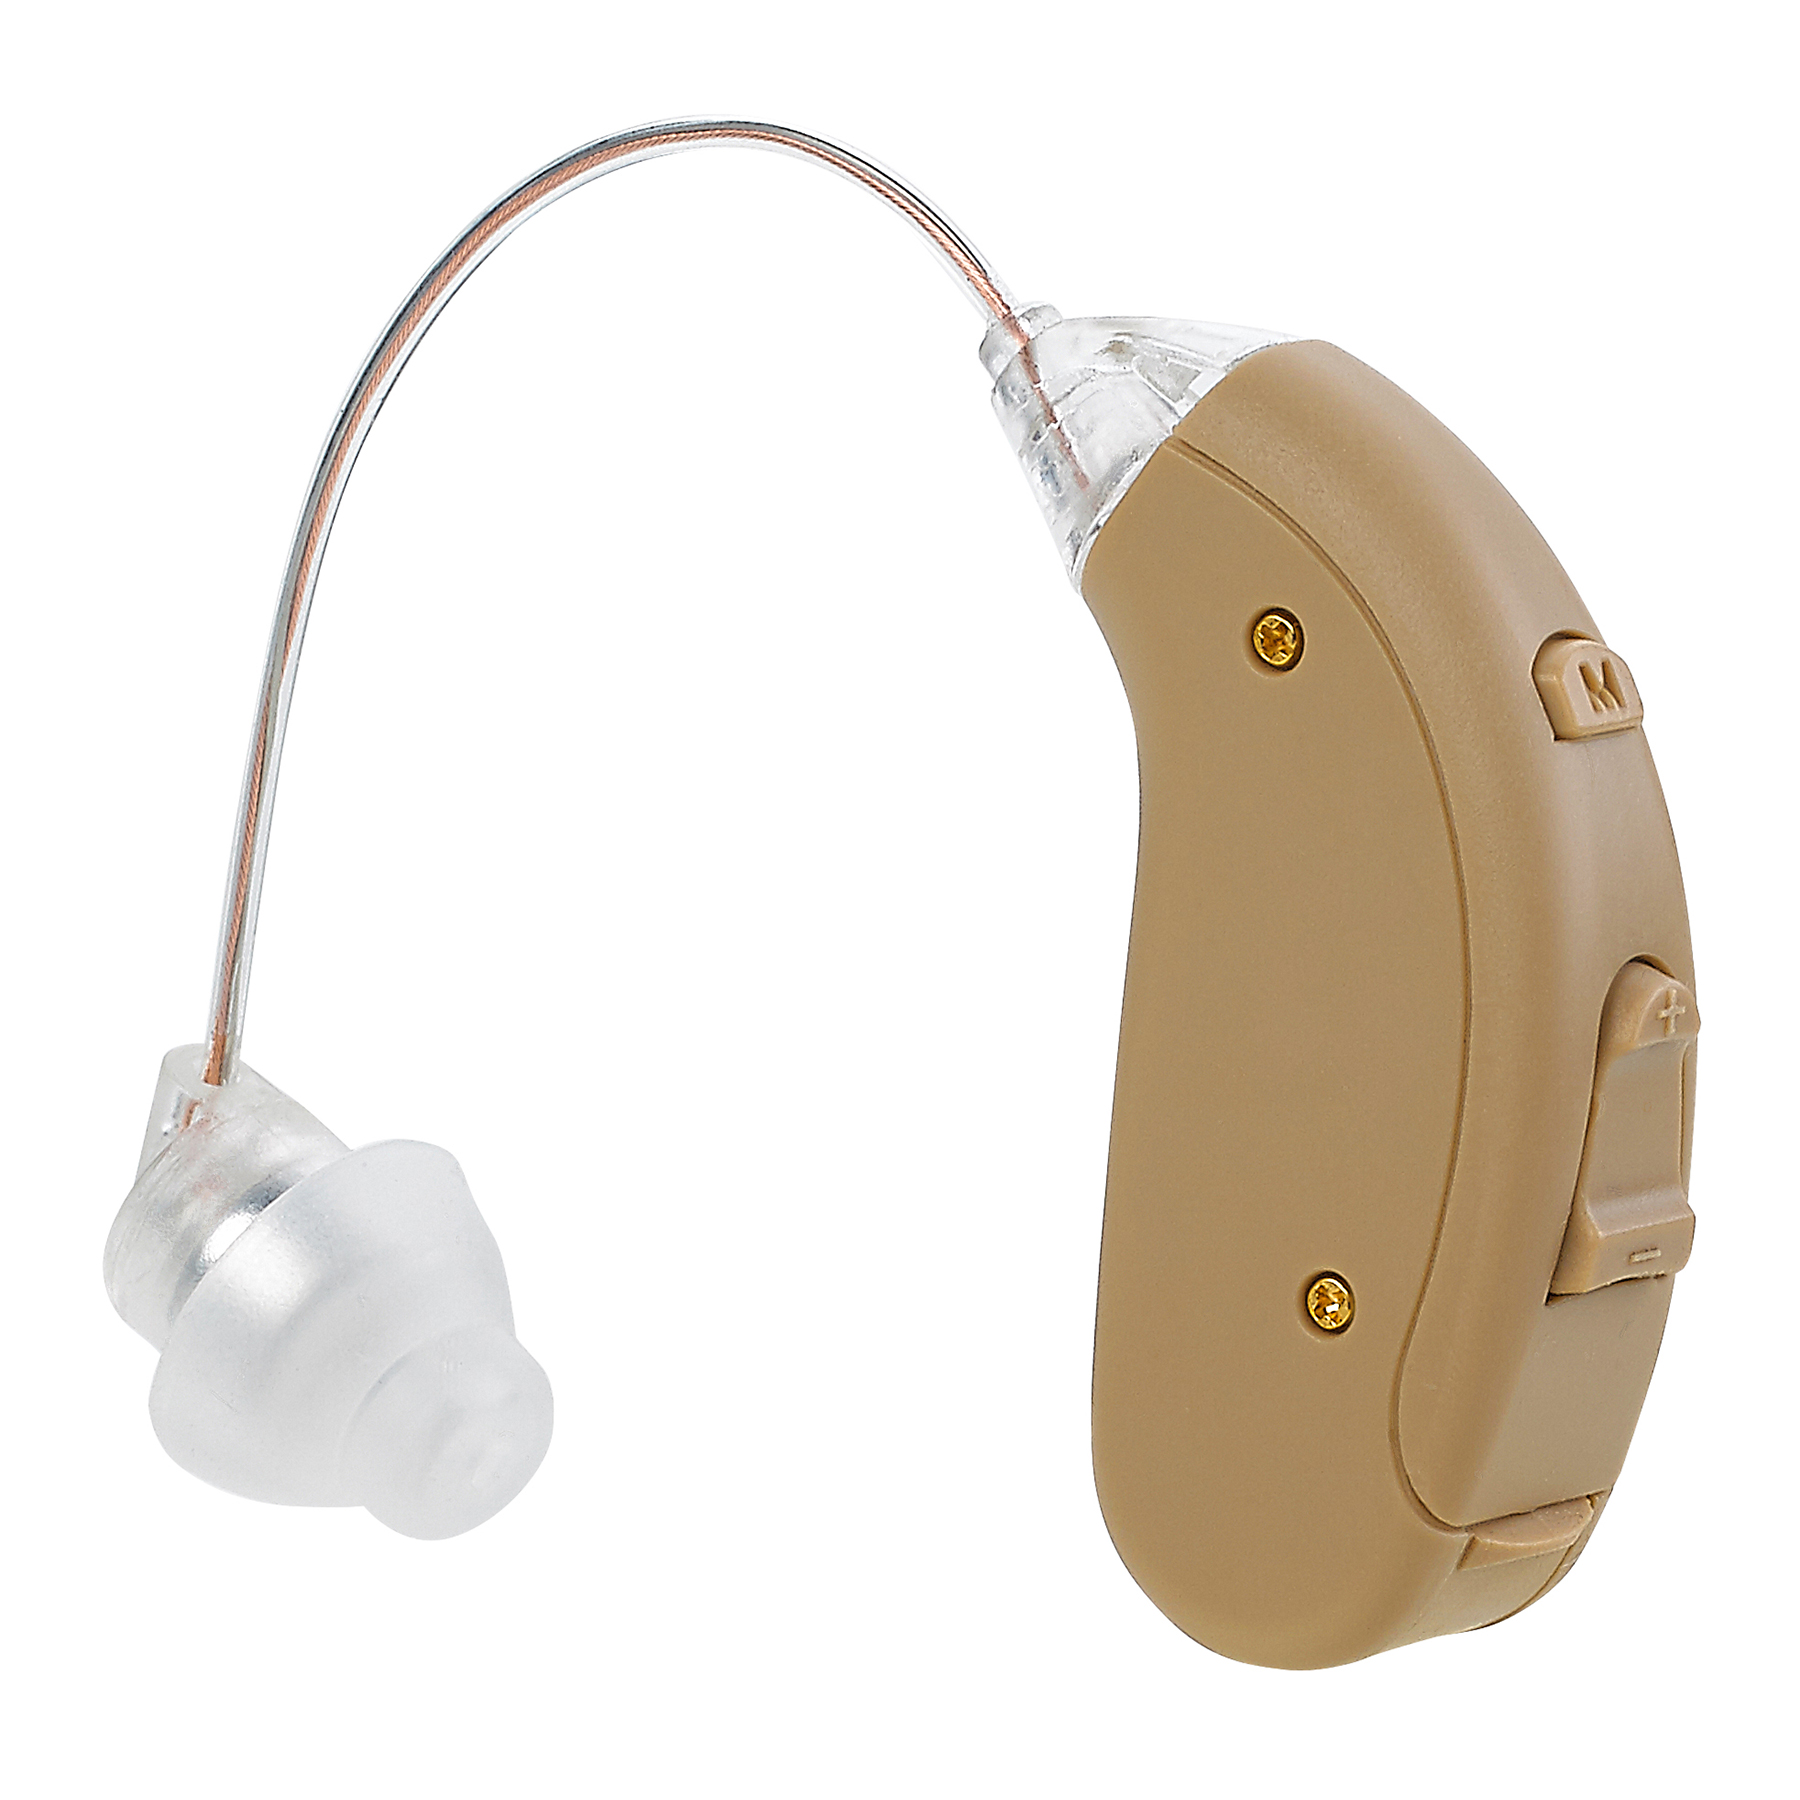 MEDca Digital BTE Hearing Personal Sound Amplifier